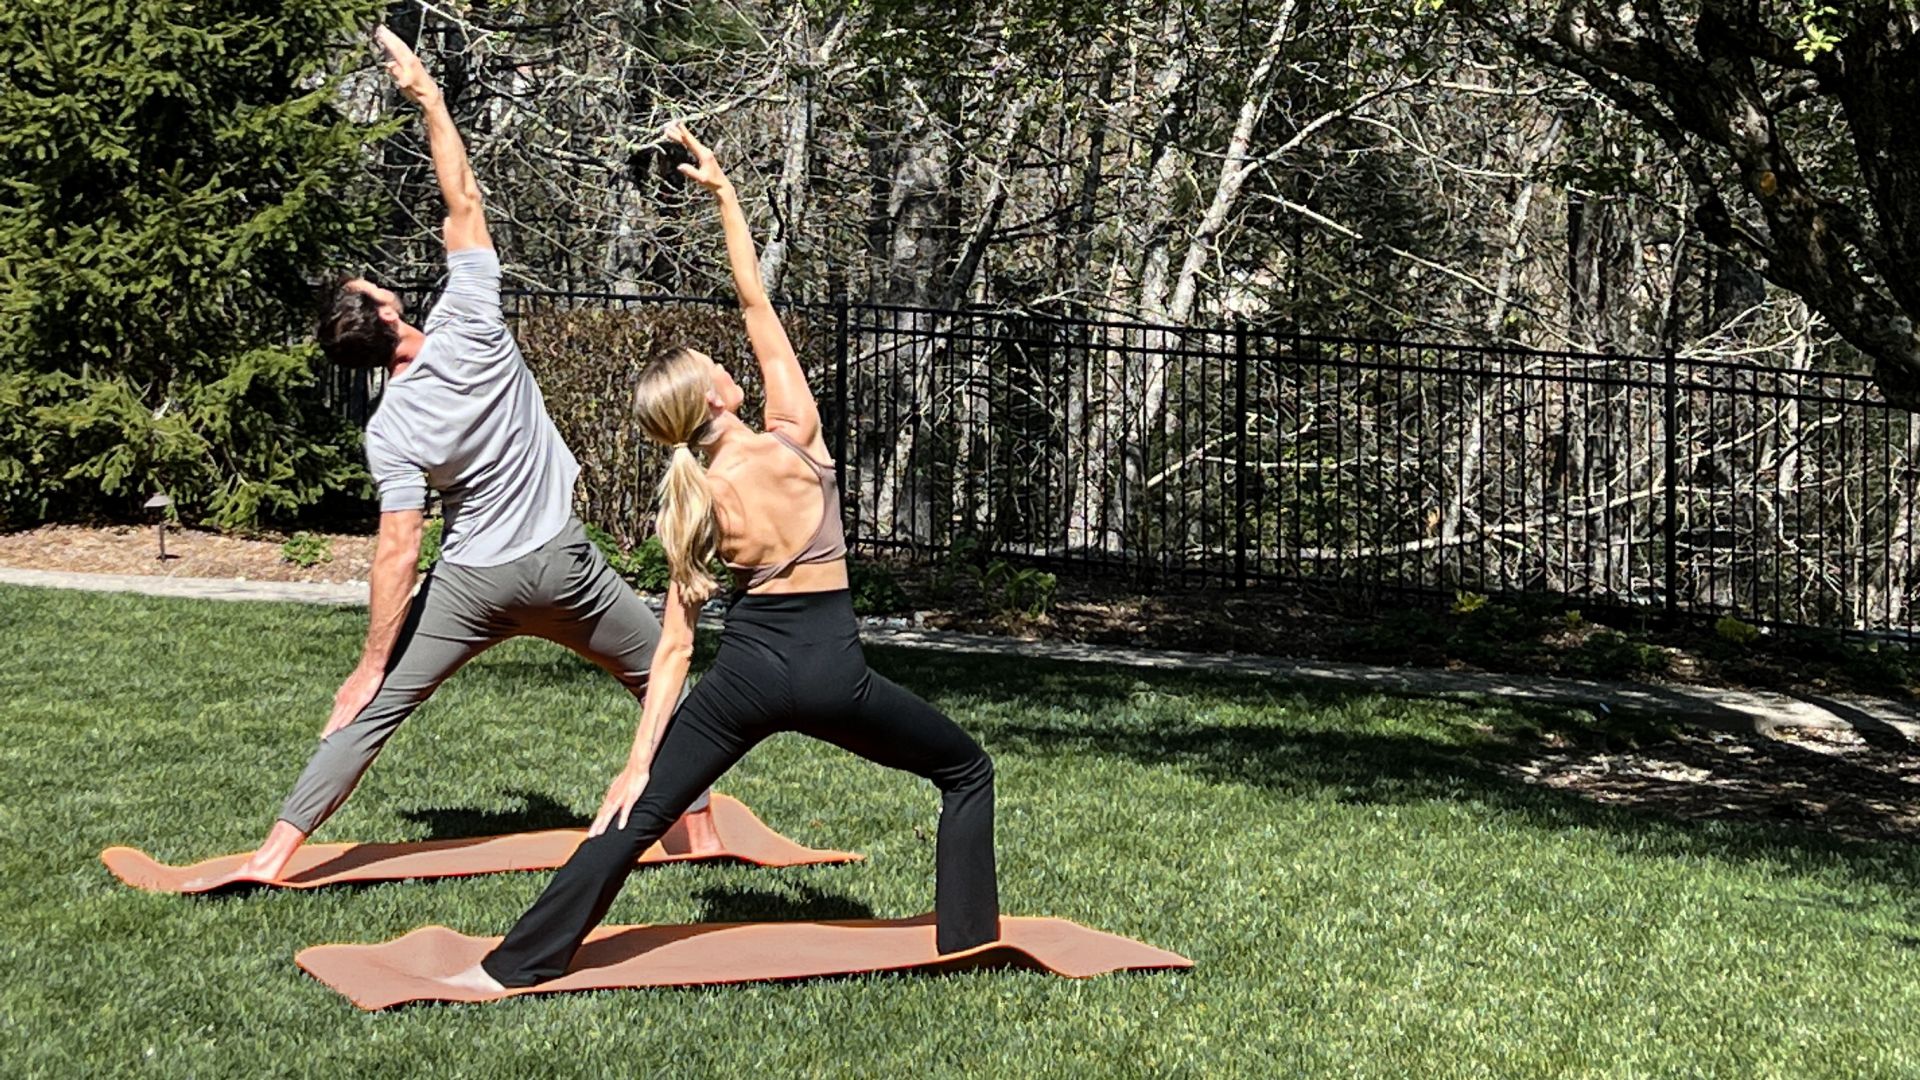 A Man And Woman Doing Yoga